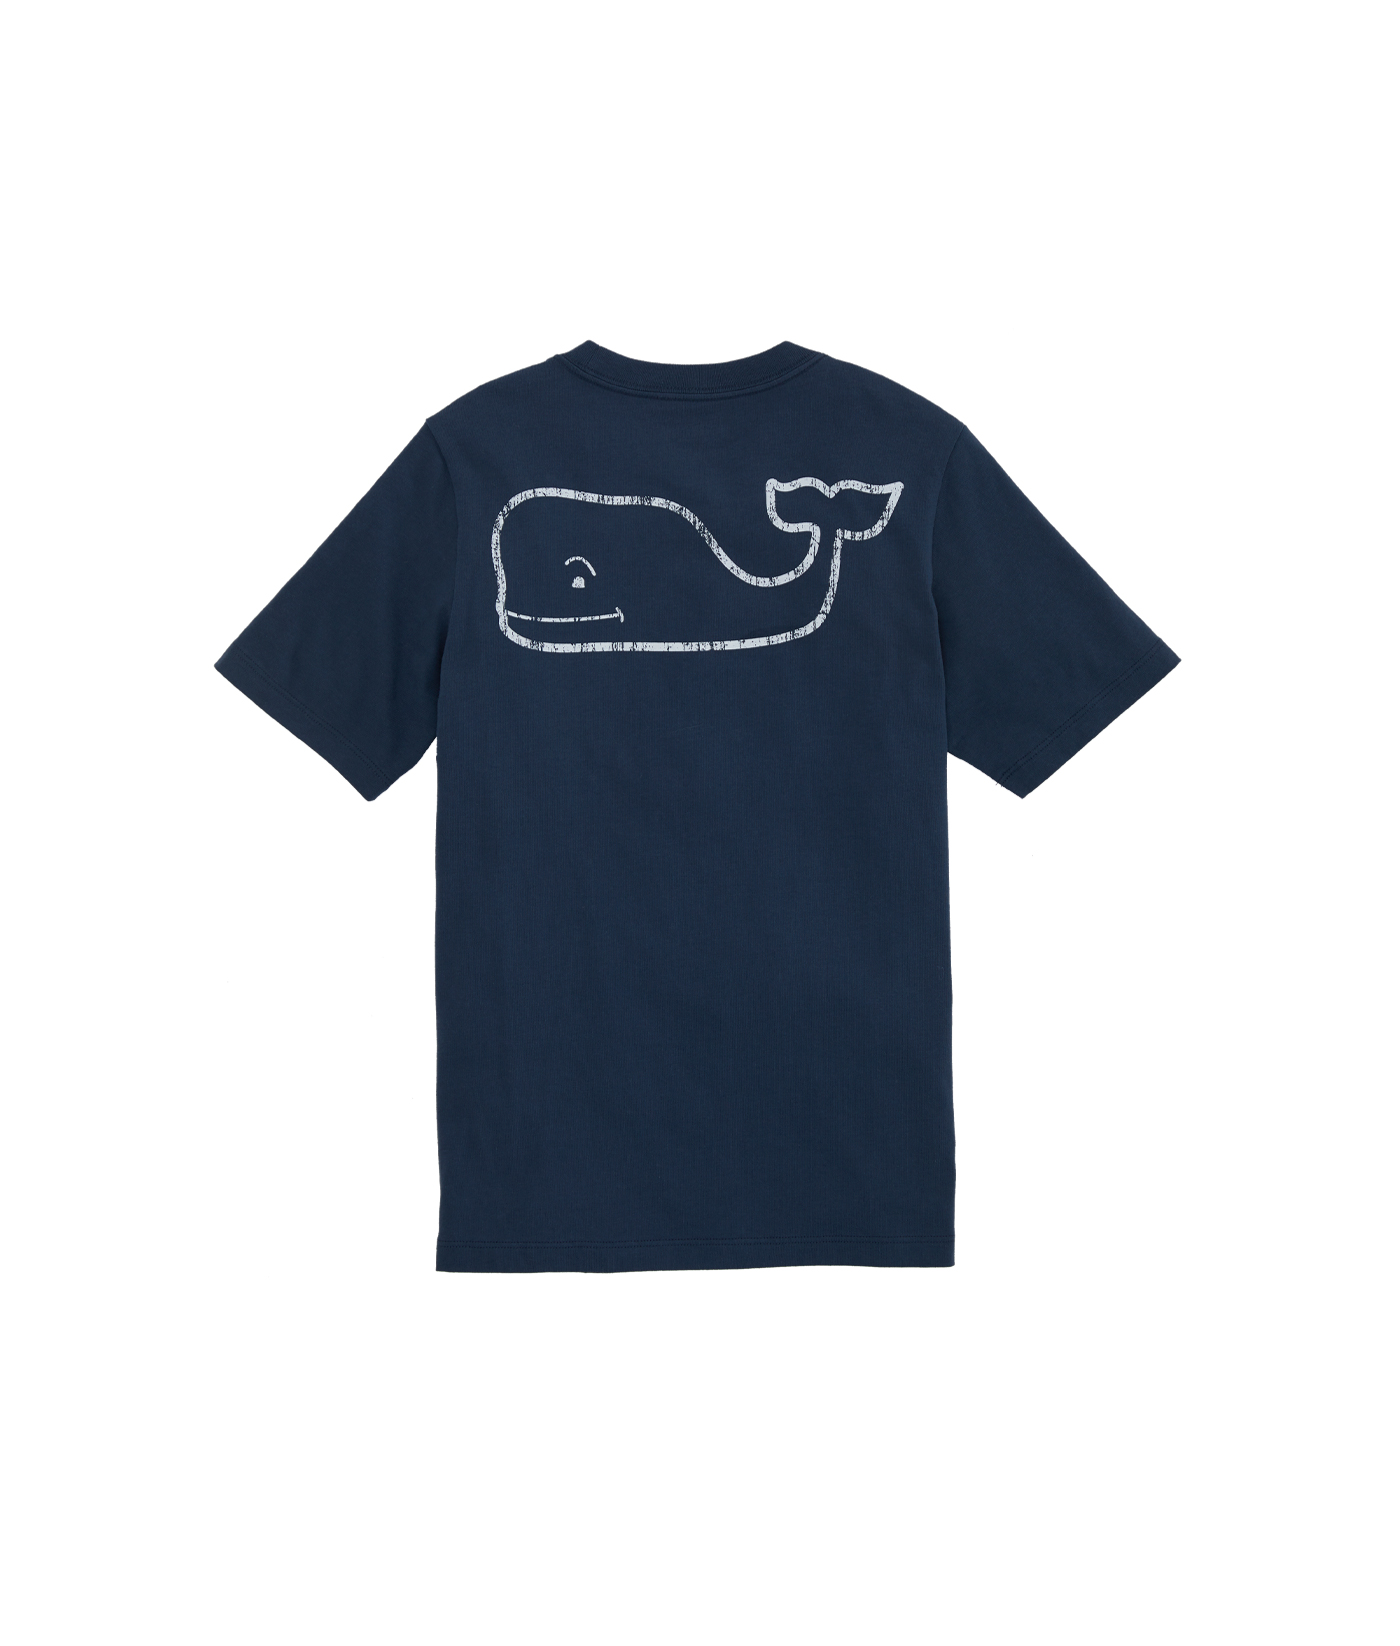 NWT Vineyard Vines Boys S/S Baseball whale Pocket T-Shirt Size M 